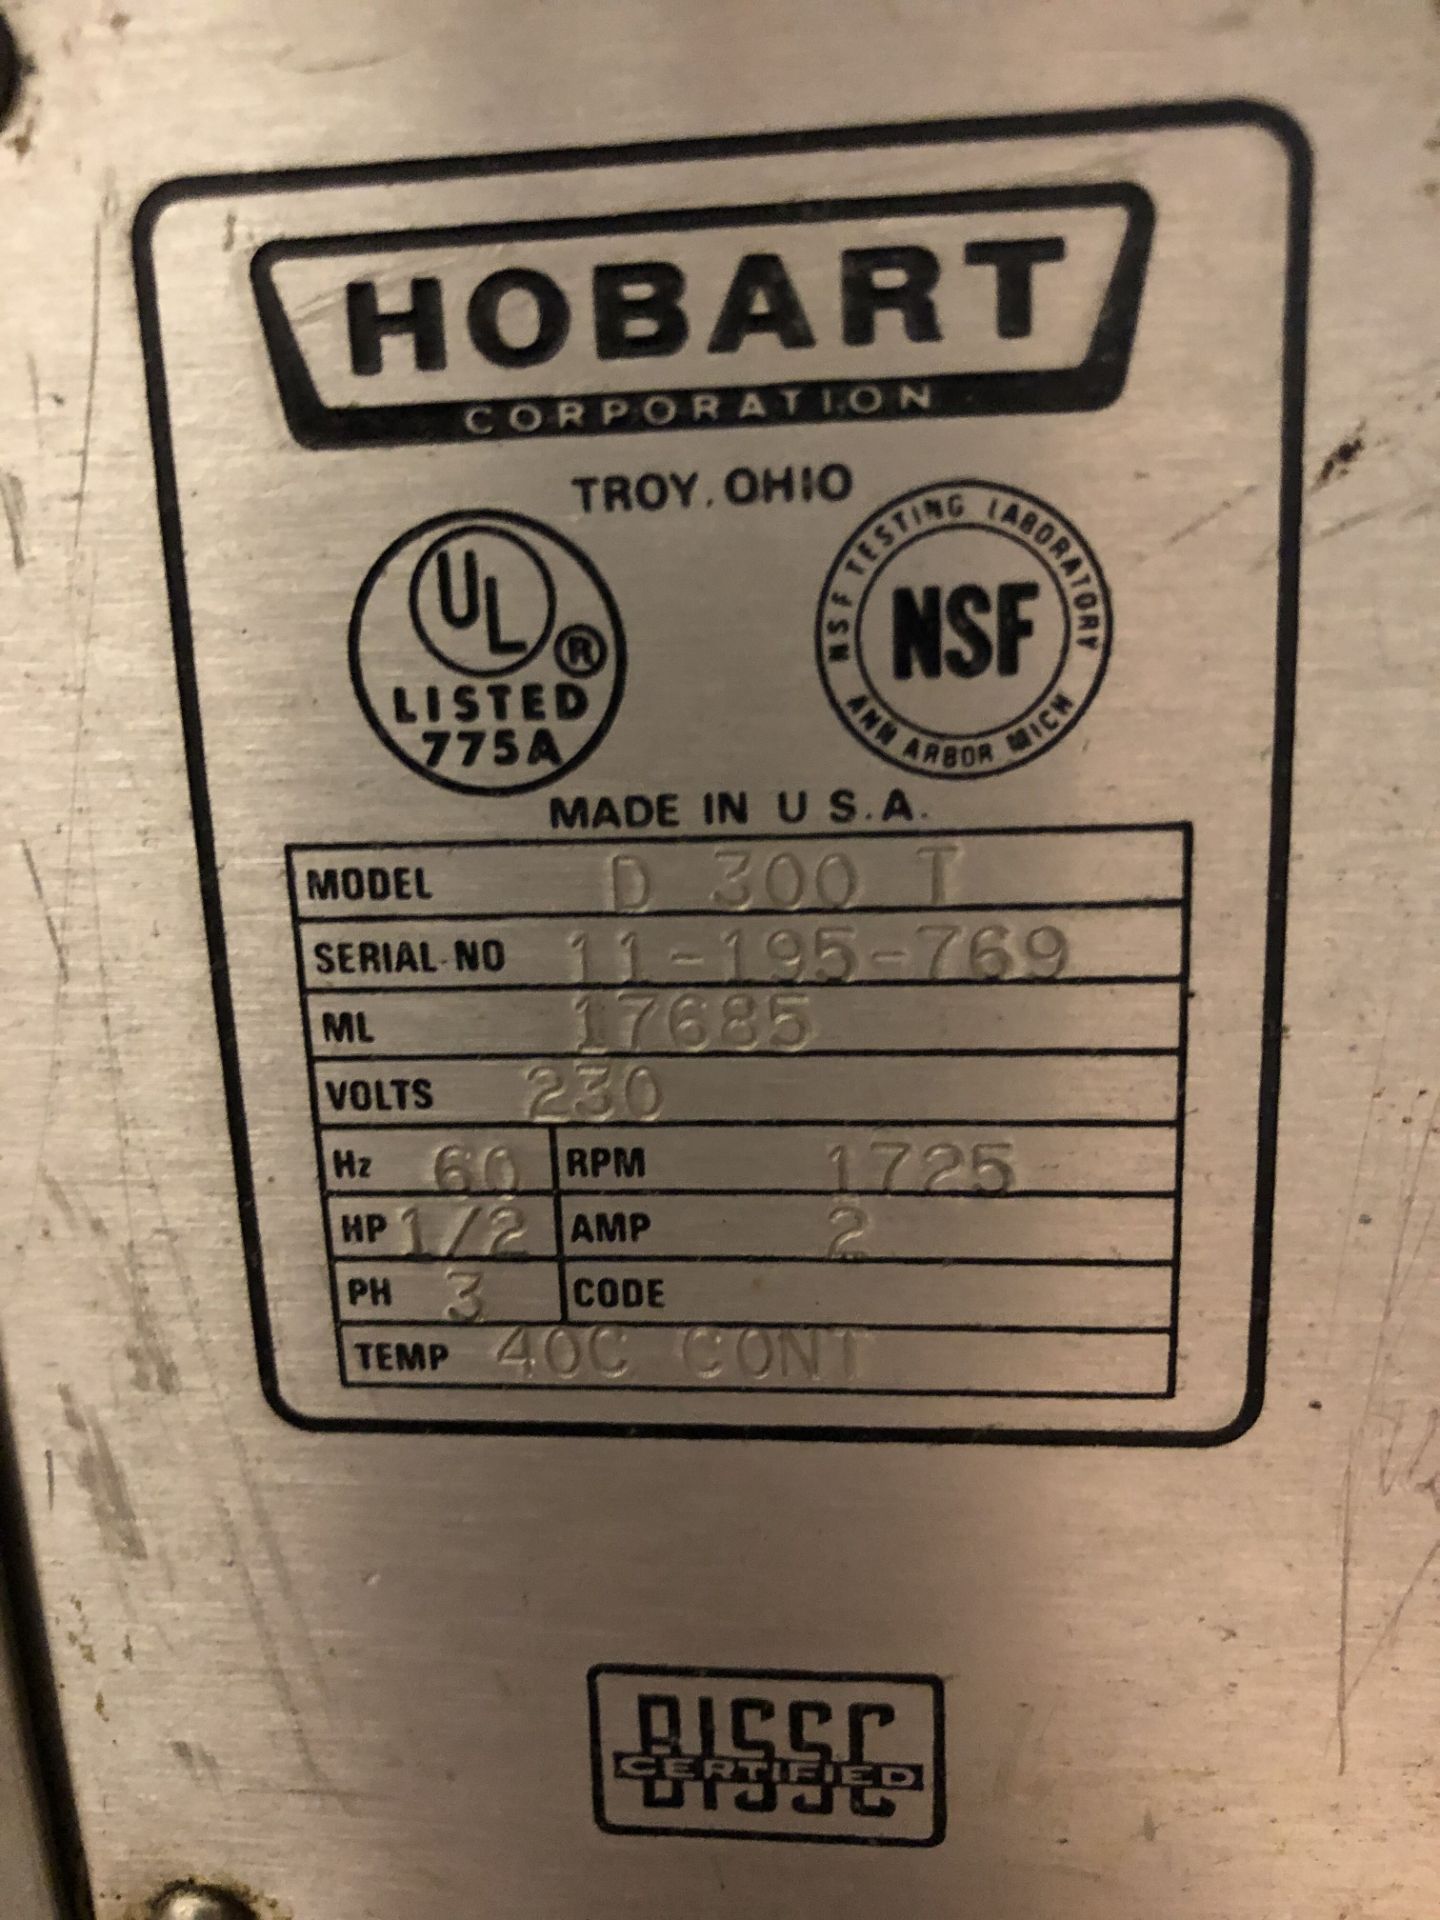 Hobart Mixer, Model #D-300-1, S/N #11-195-769, W/ 1/2 HP Motor, Rigging Price: $100 - Image 2 of 4